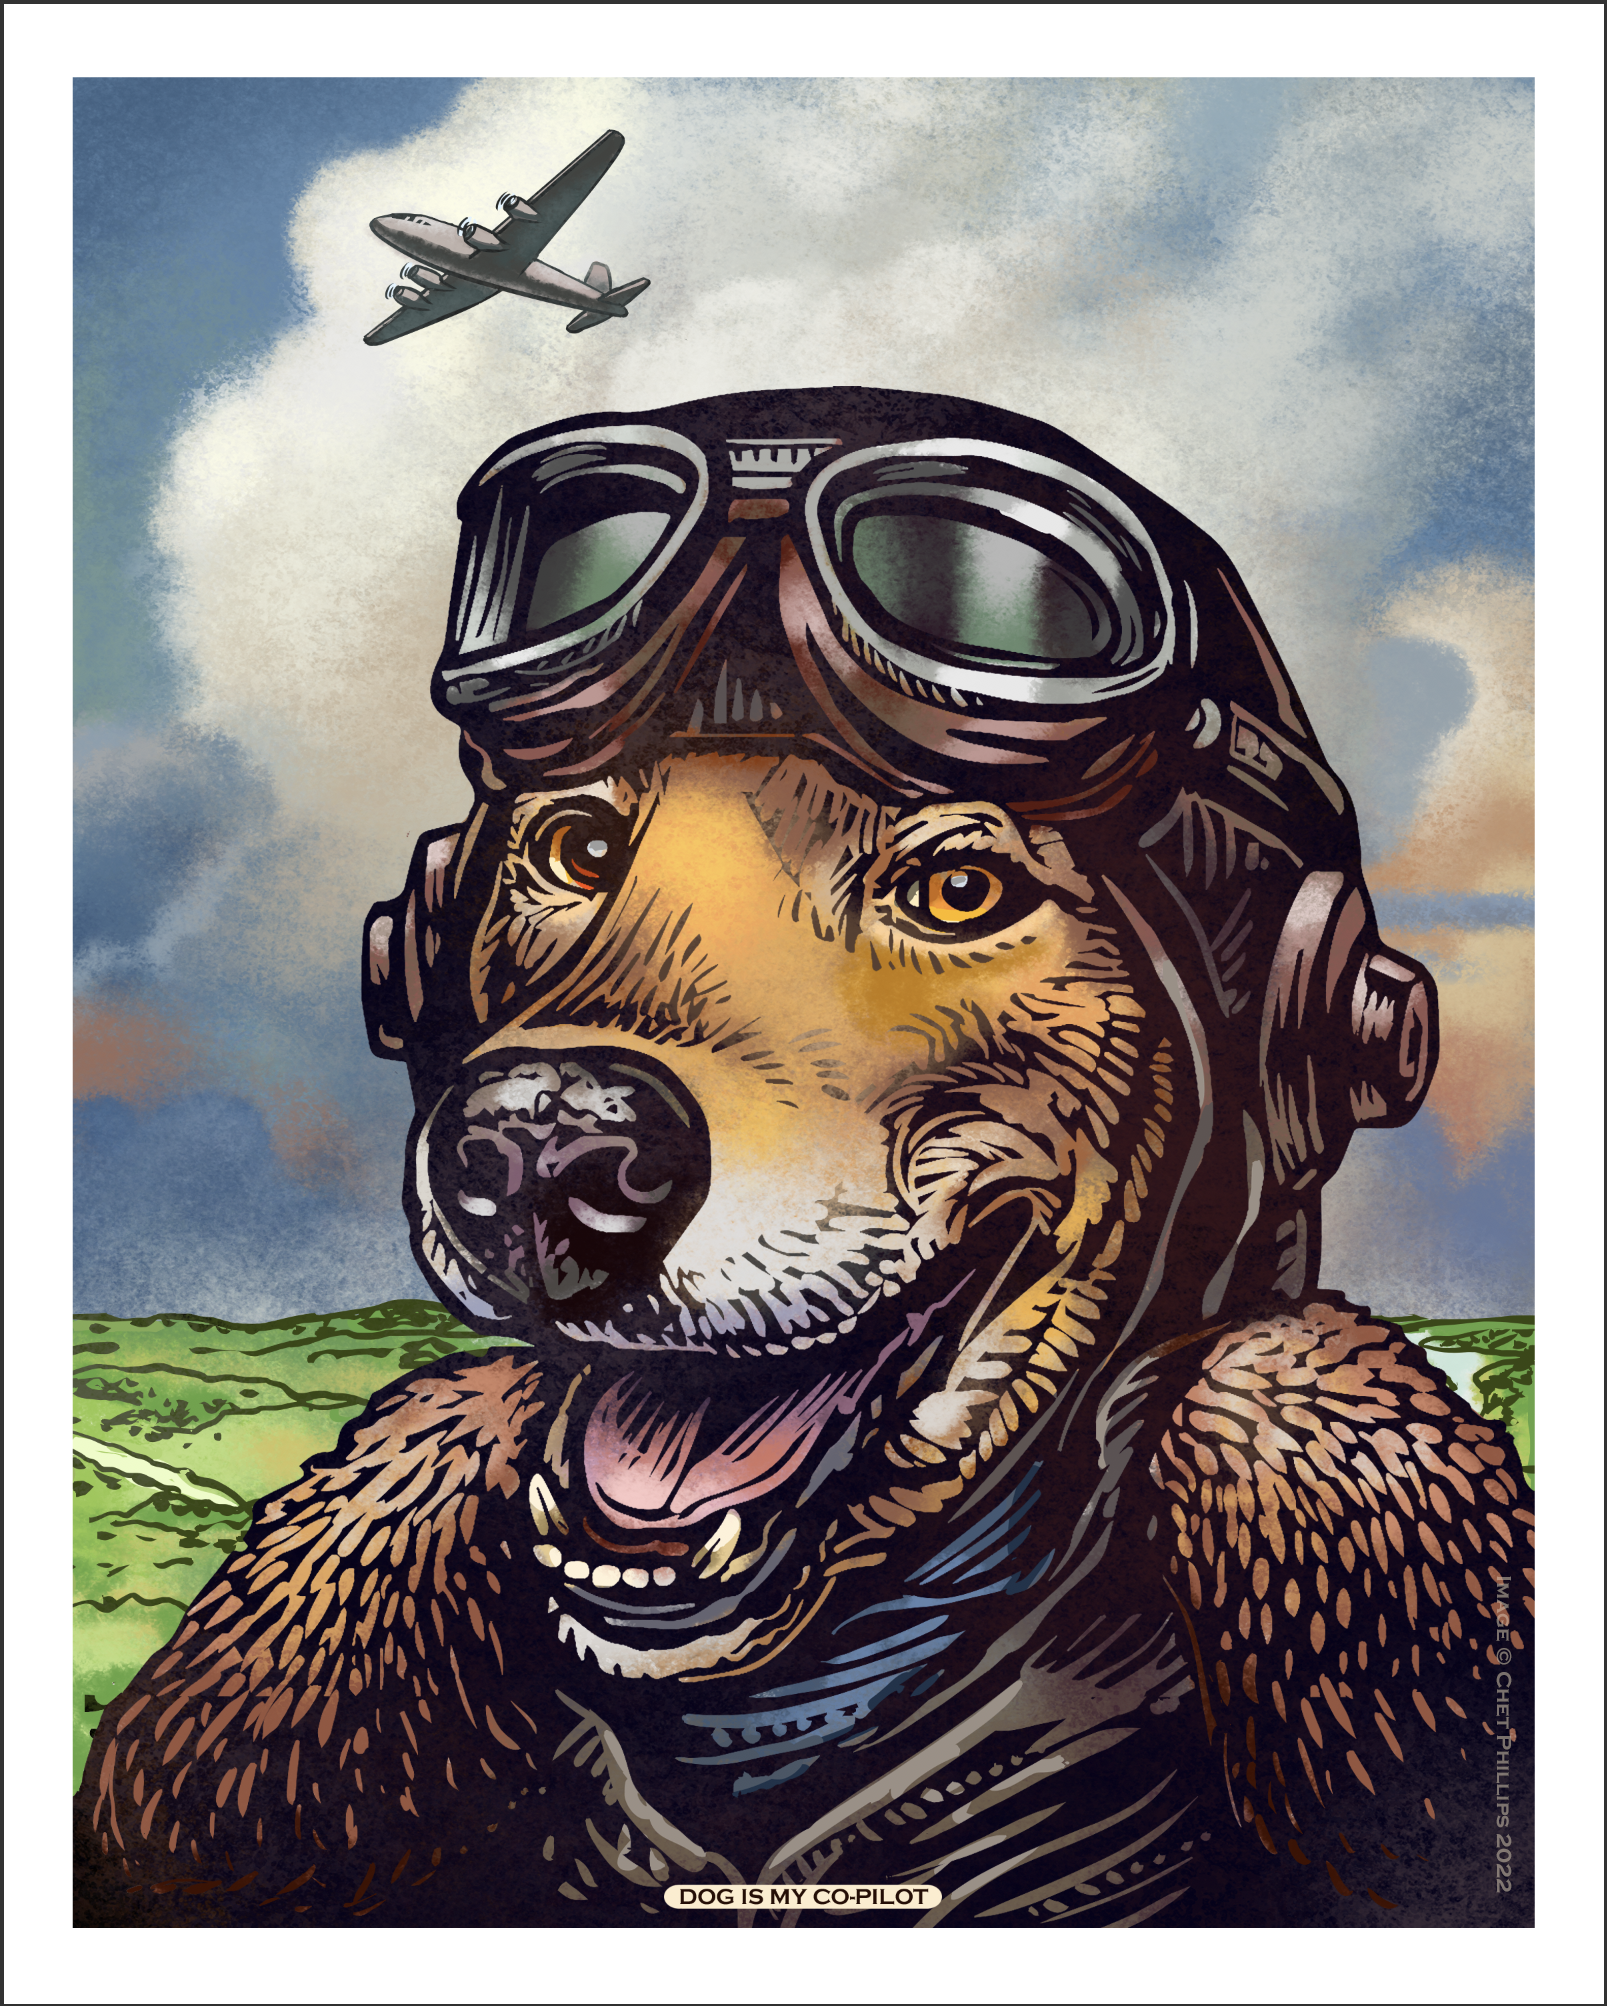 Dog Is My Co-Pilot 8 x 10 print